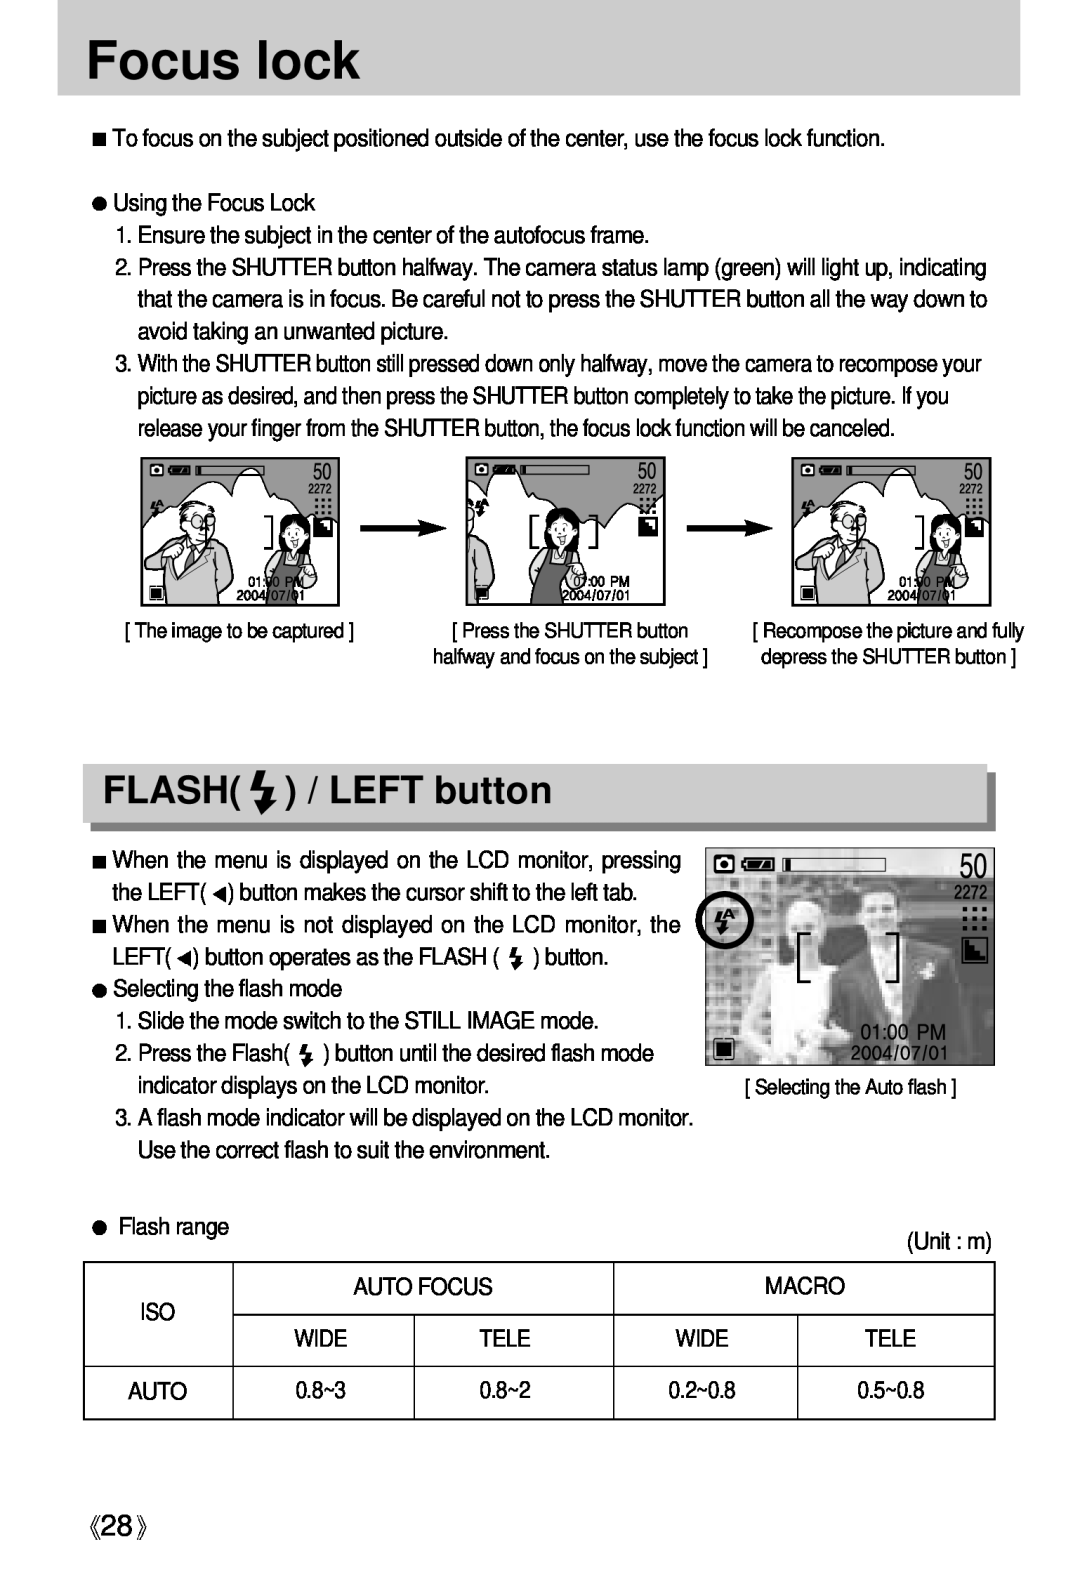 Samsung Digimax U-CA user manual Focus lock, FLASH / LEFT button 